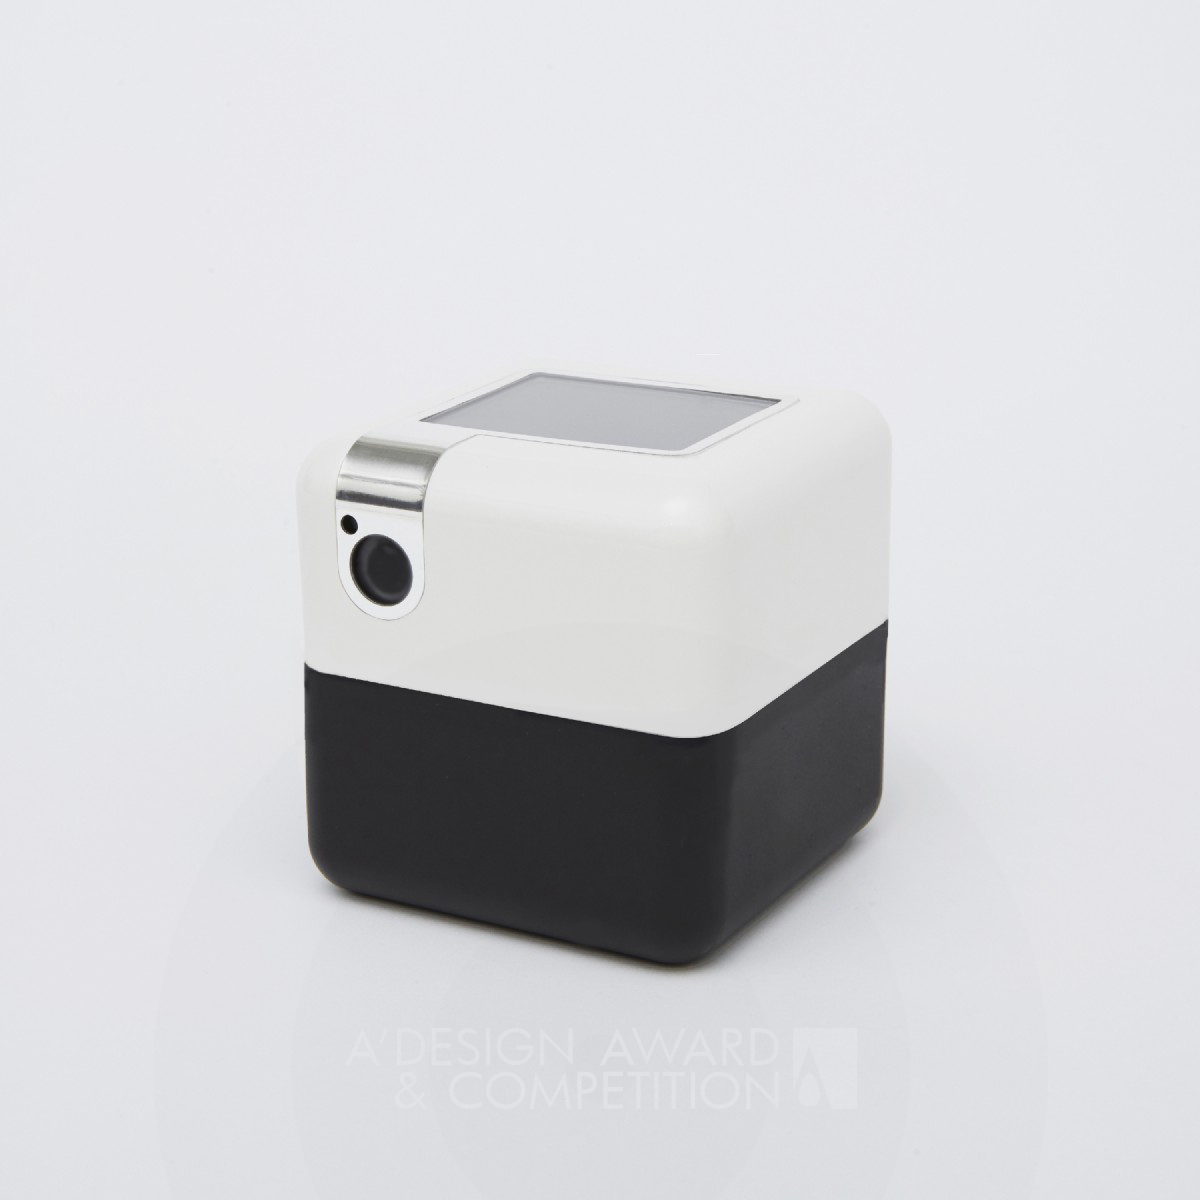 PLEN Cube Portable Assistant Robot by Natsuo Akazawa